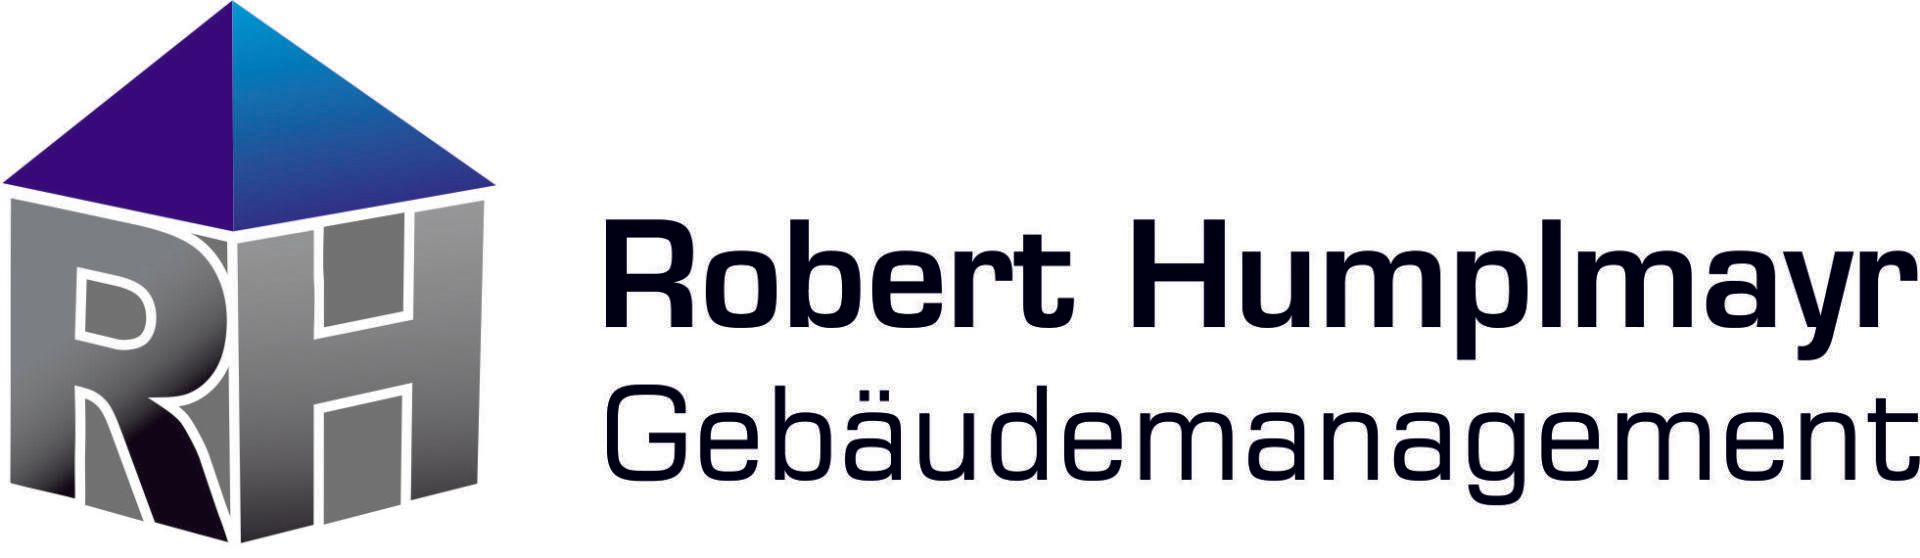 Robert Humplmayr Gebäudemanagement